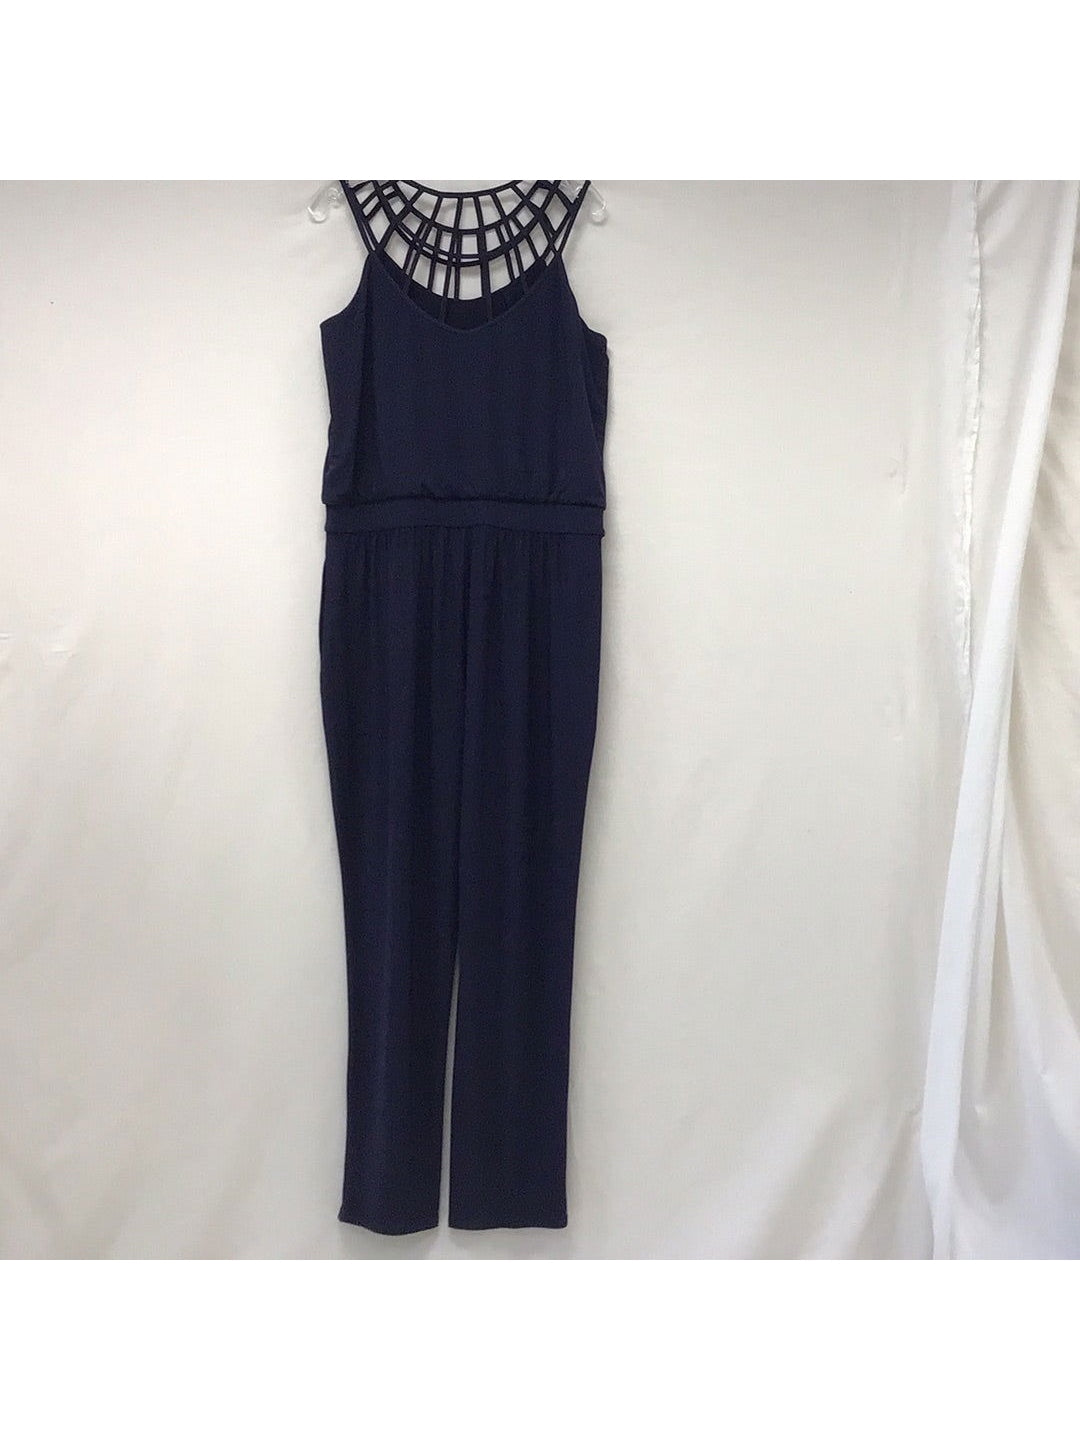 White House Black Market Dress Dark Blue Women's 14 - The Kennedy Collective Thrift - 